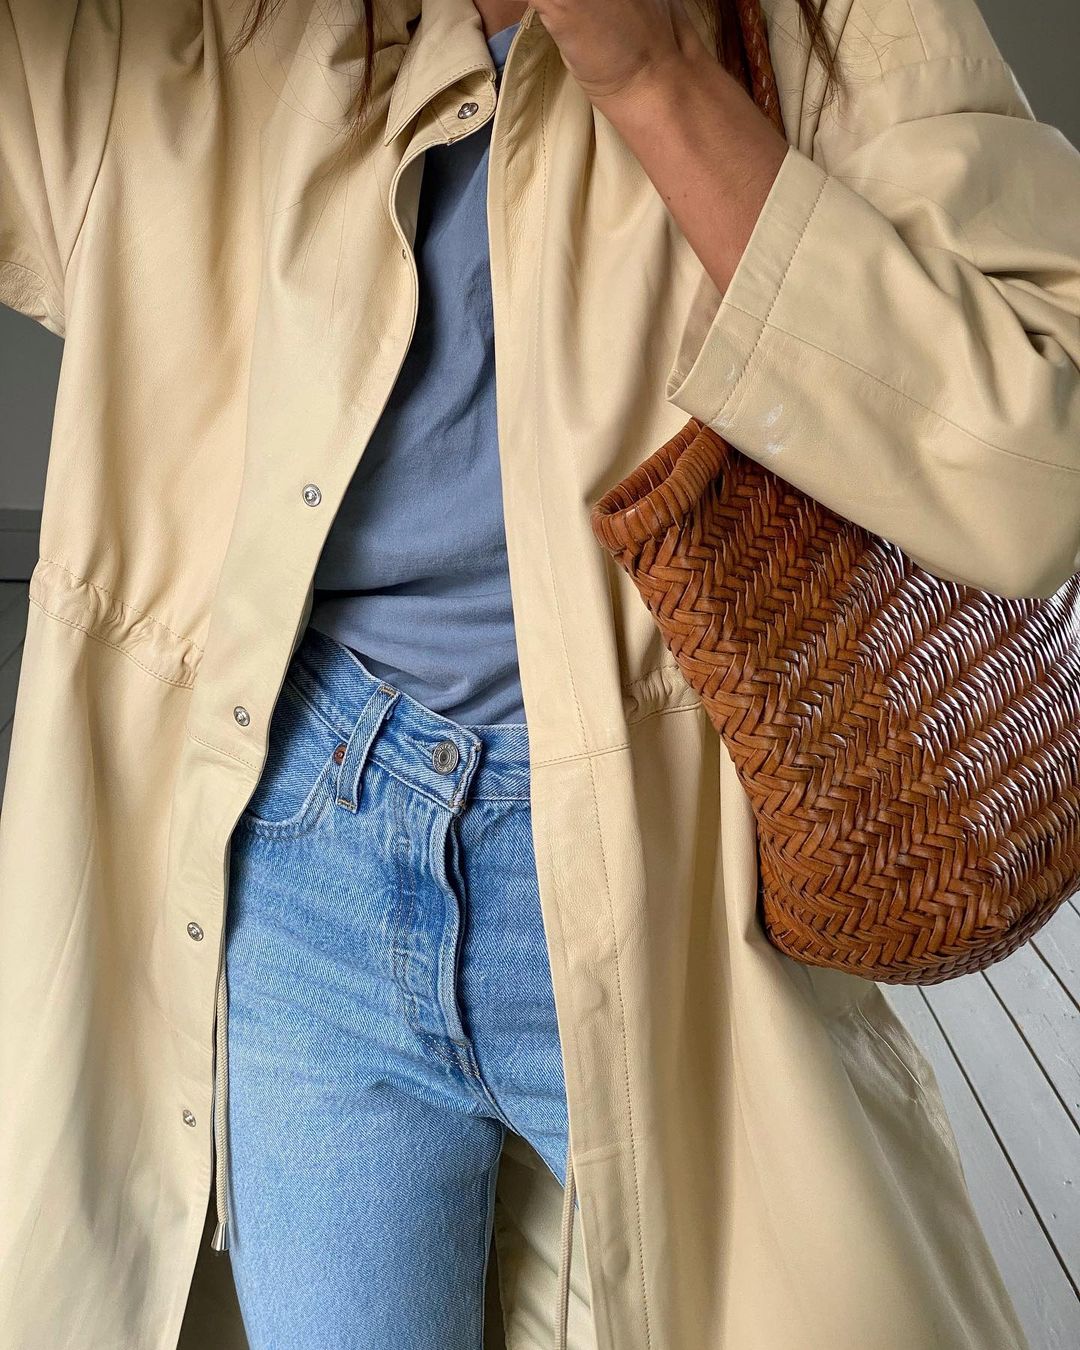 Summer 2022 Handbag Trends: Woven leather